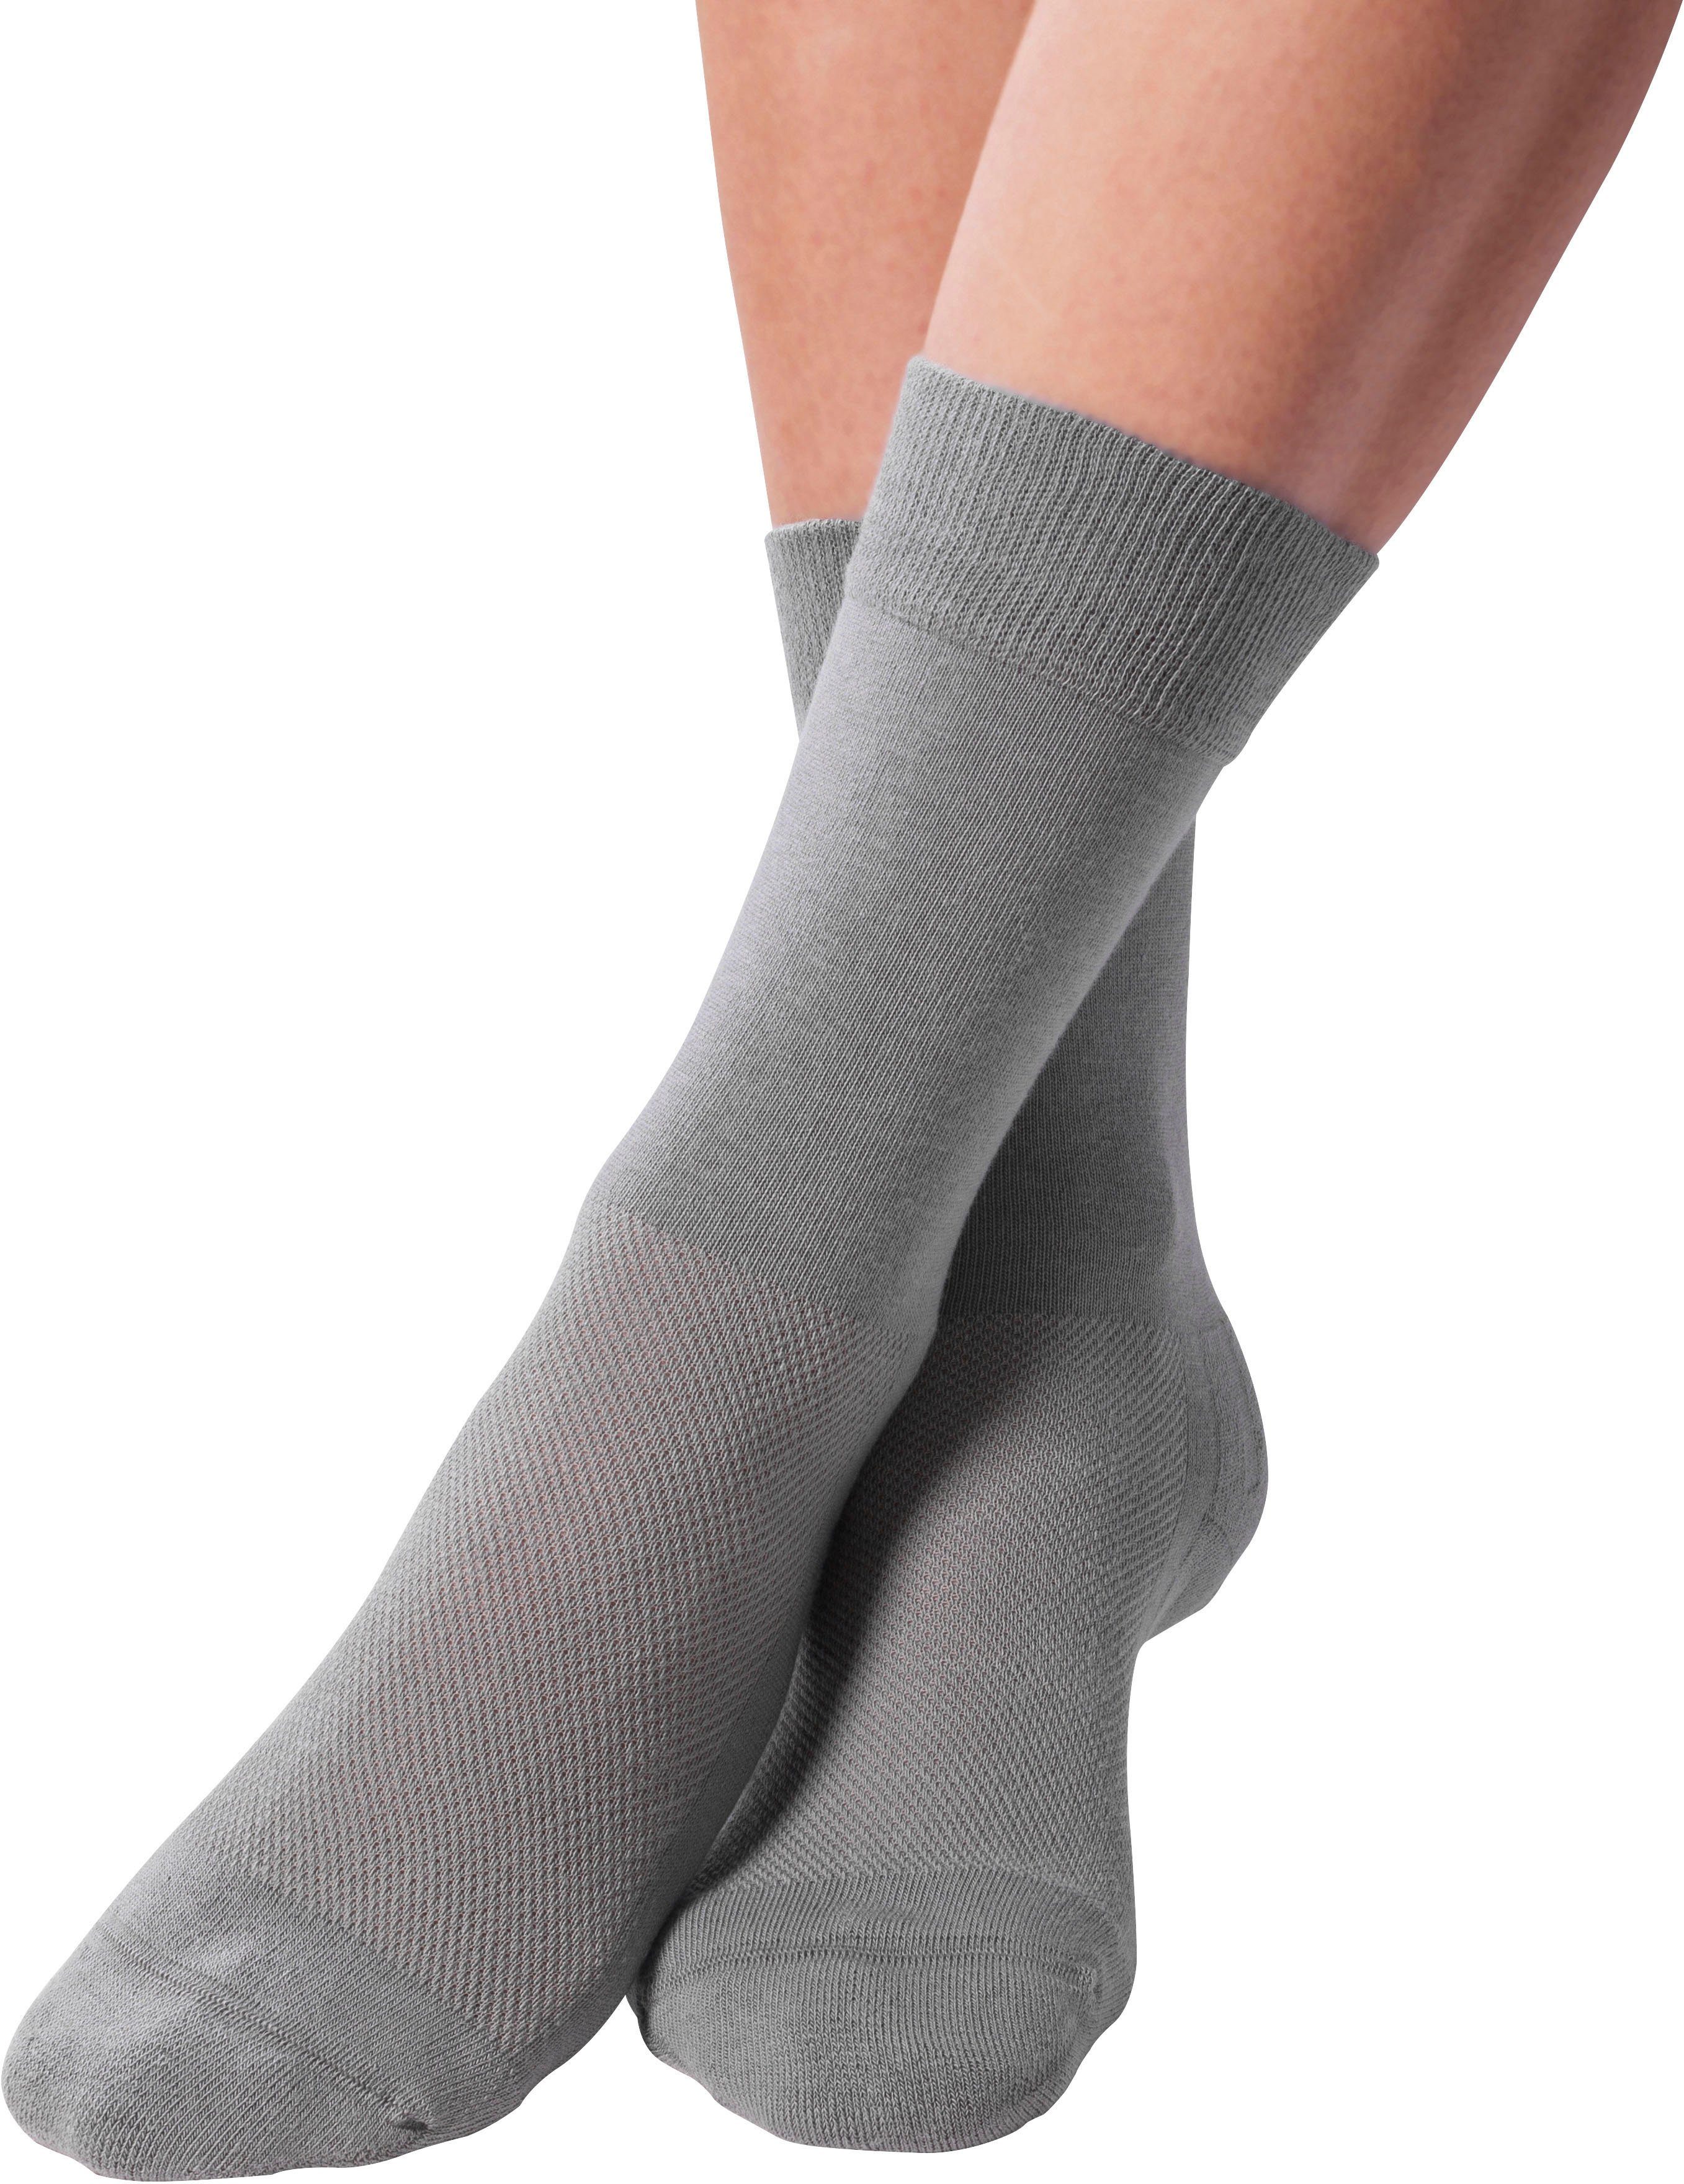 Fußgut Diabetikersocken Venenfeund Sensitiv Socken grau (2-Paar)